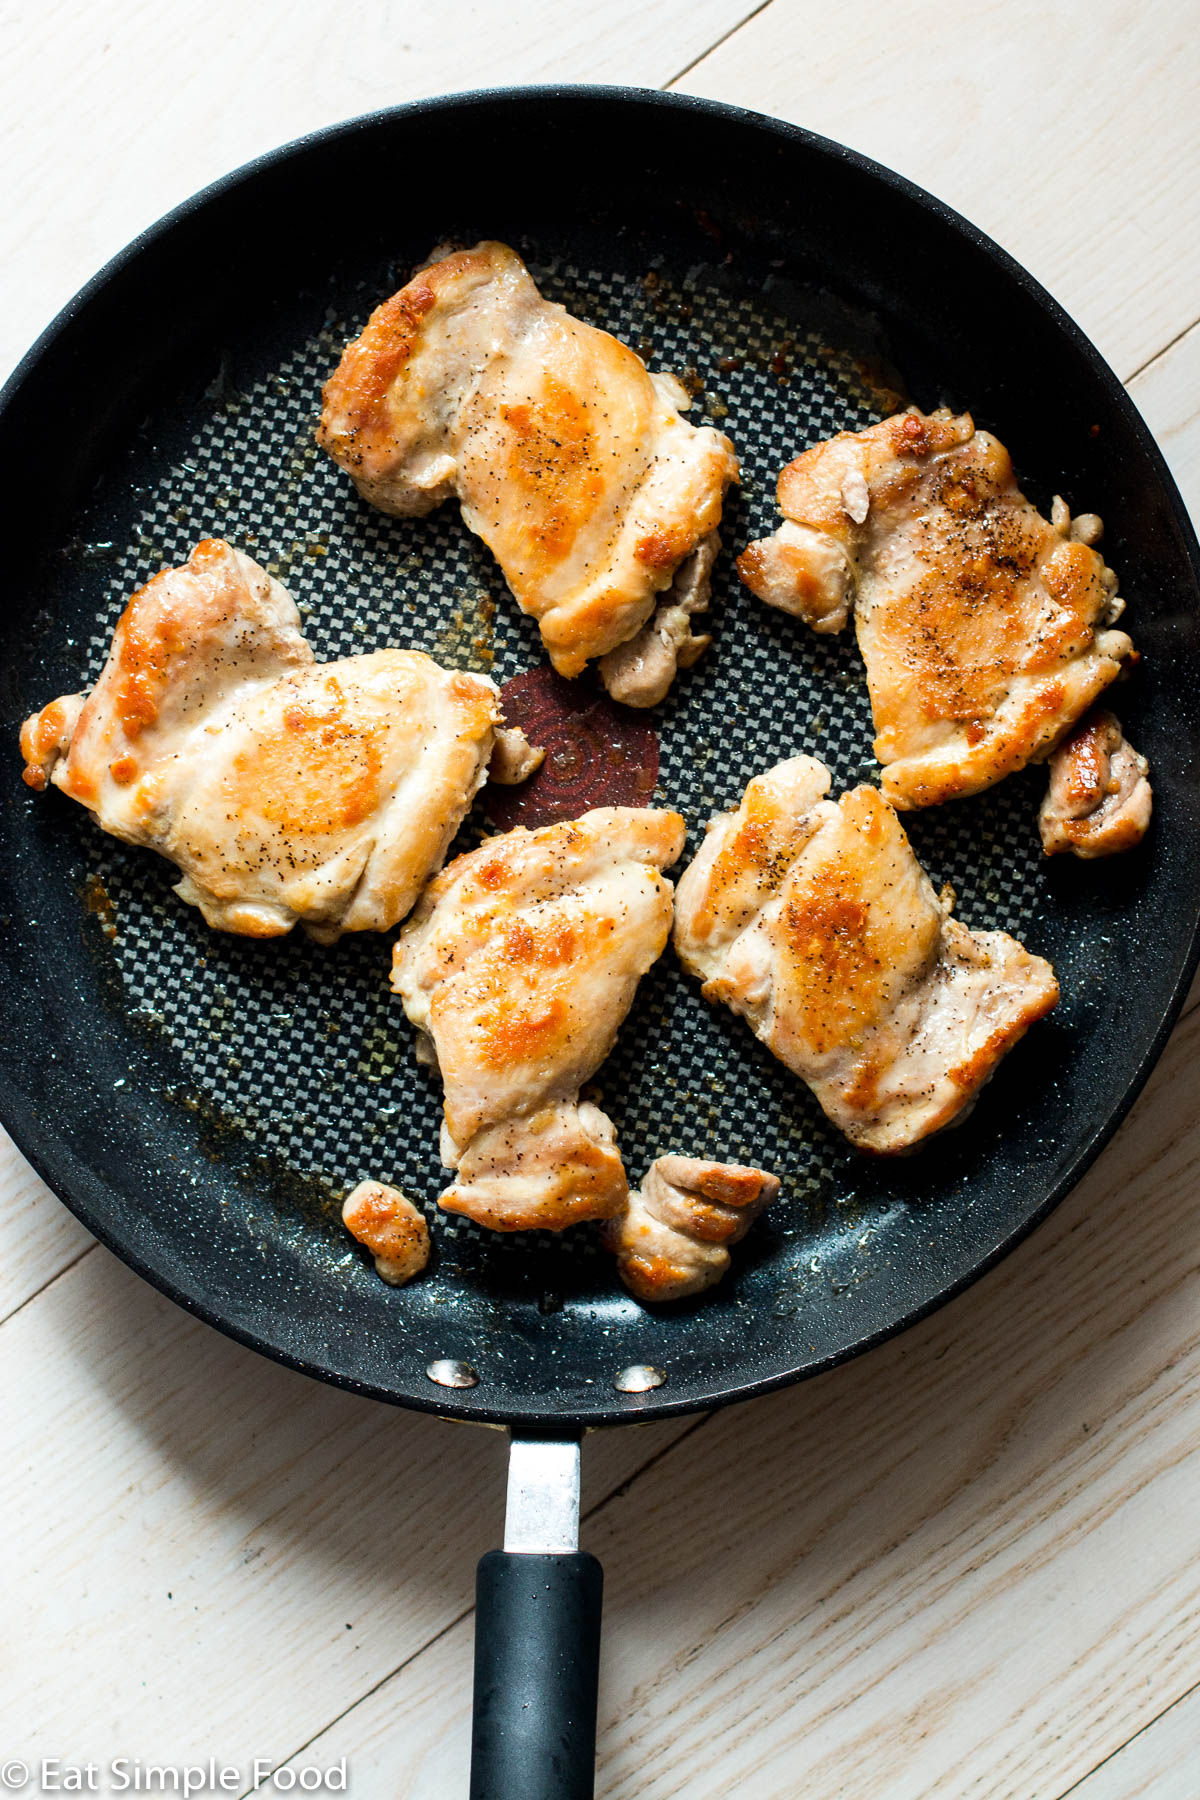 https://eatsimplefood.com/wp-content/uploads/2020/12/Chicken-Thighs-Pan-Fried-1800-EatSimpleFood.com_.jpg